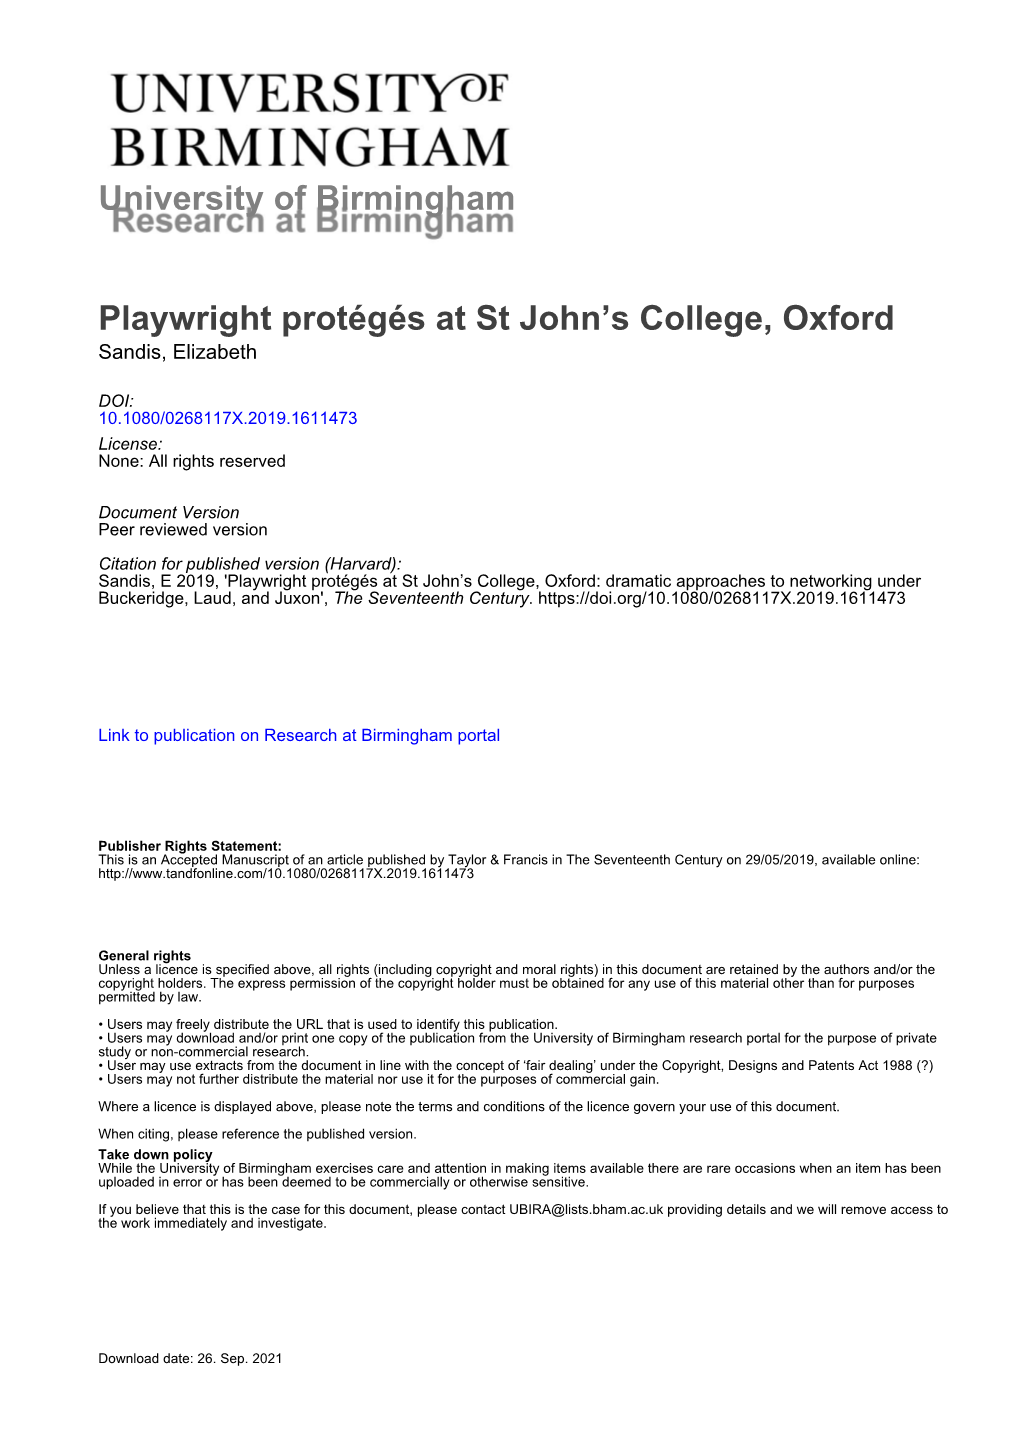 University of Birmingham Playwright Protégés at St John's College, Oxford